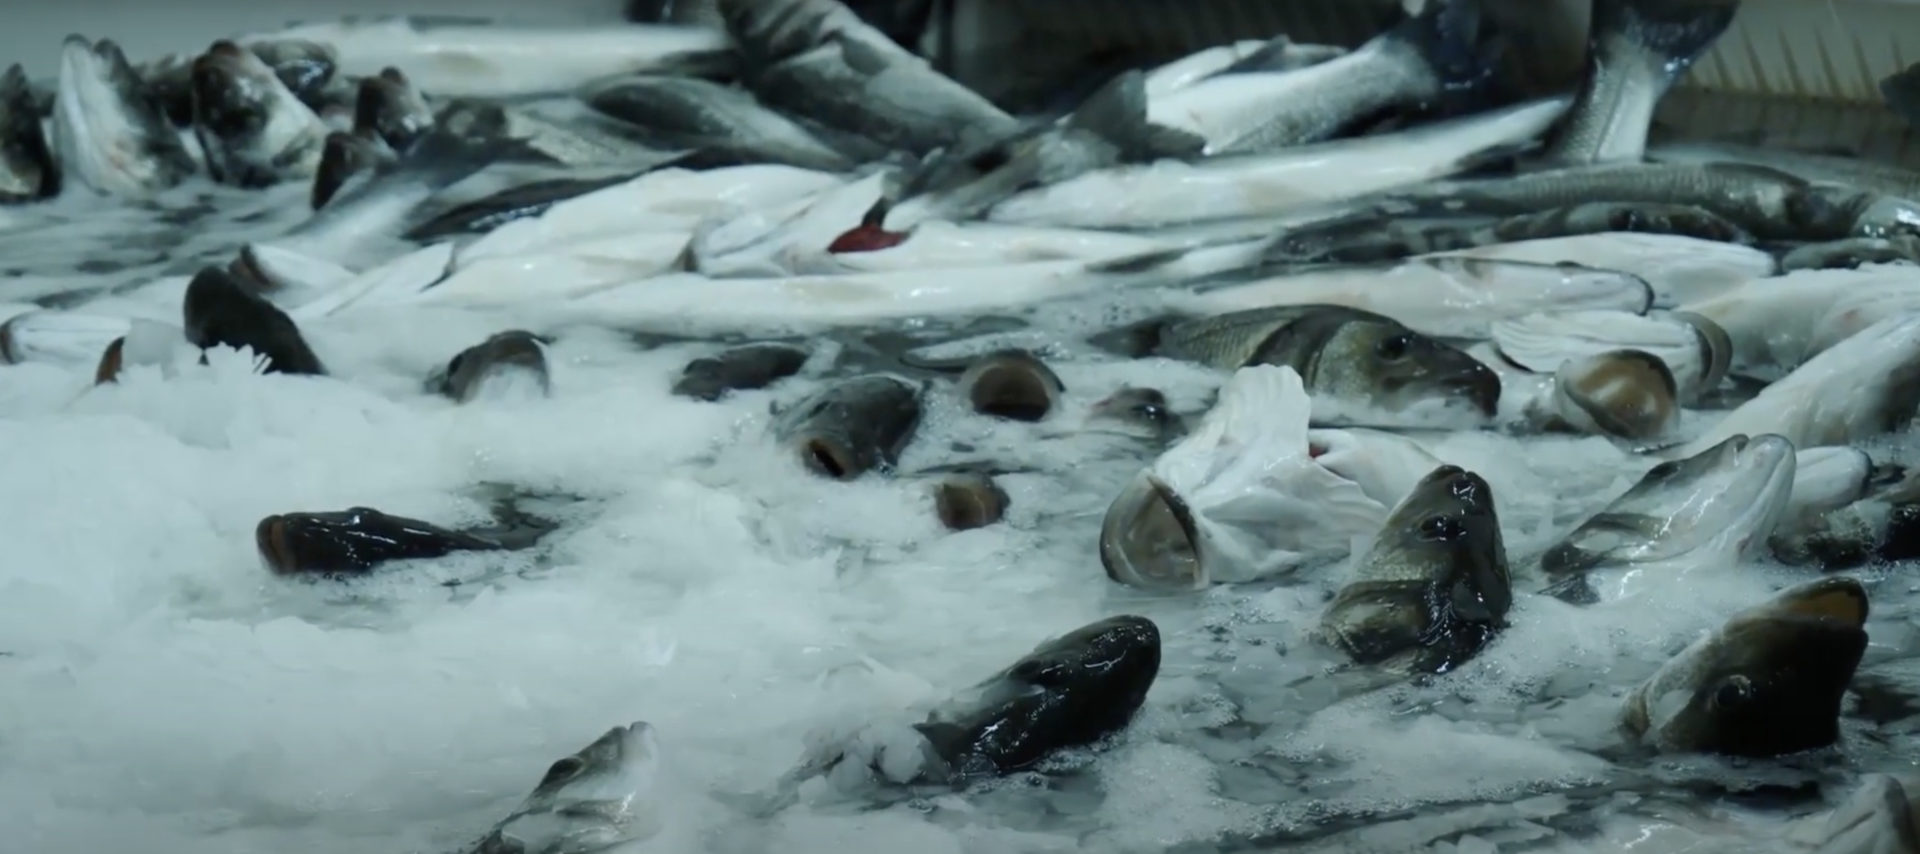 Ocean desolation: how fish farm pollution is killing marine life in Greece 4